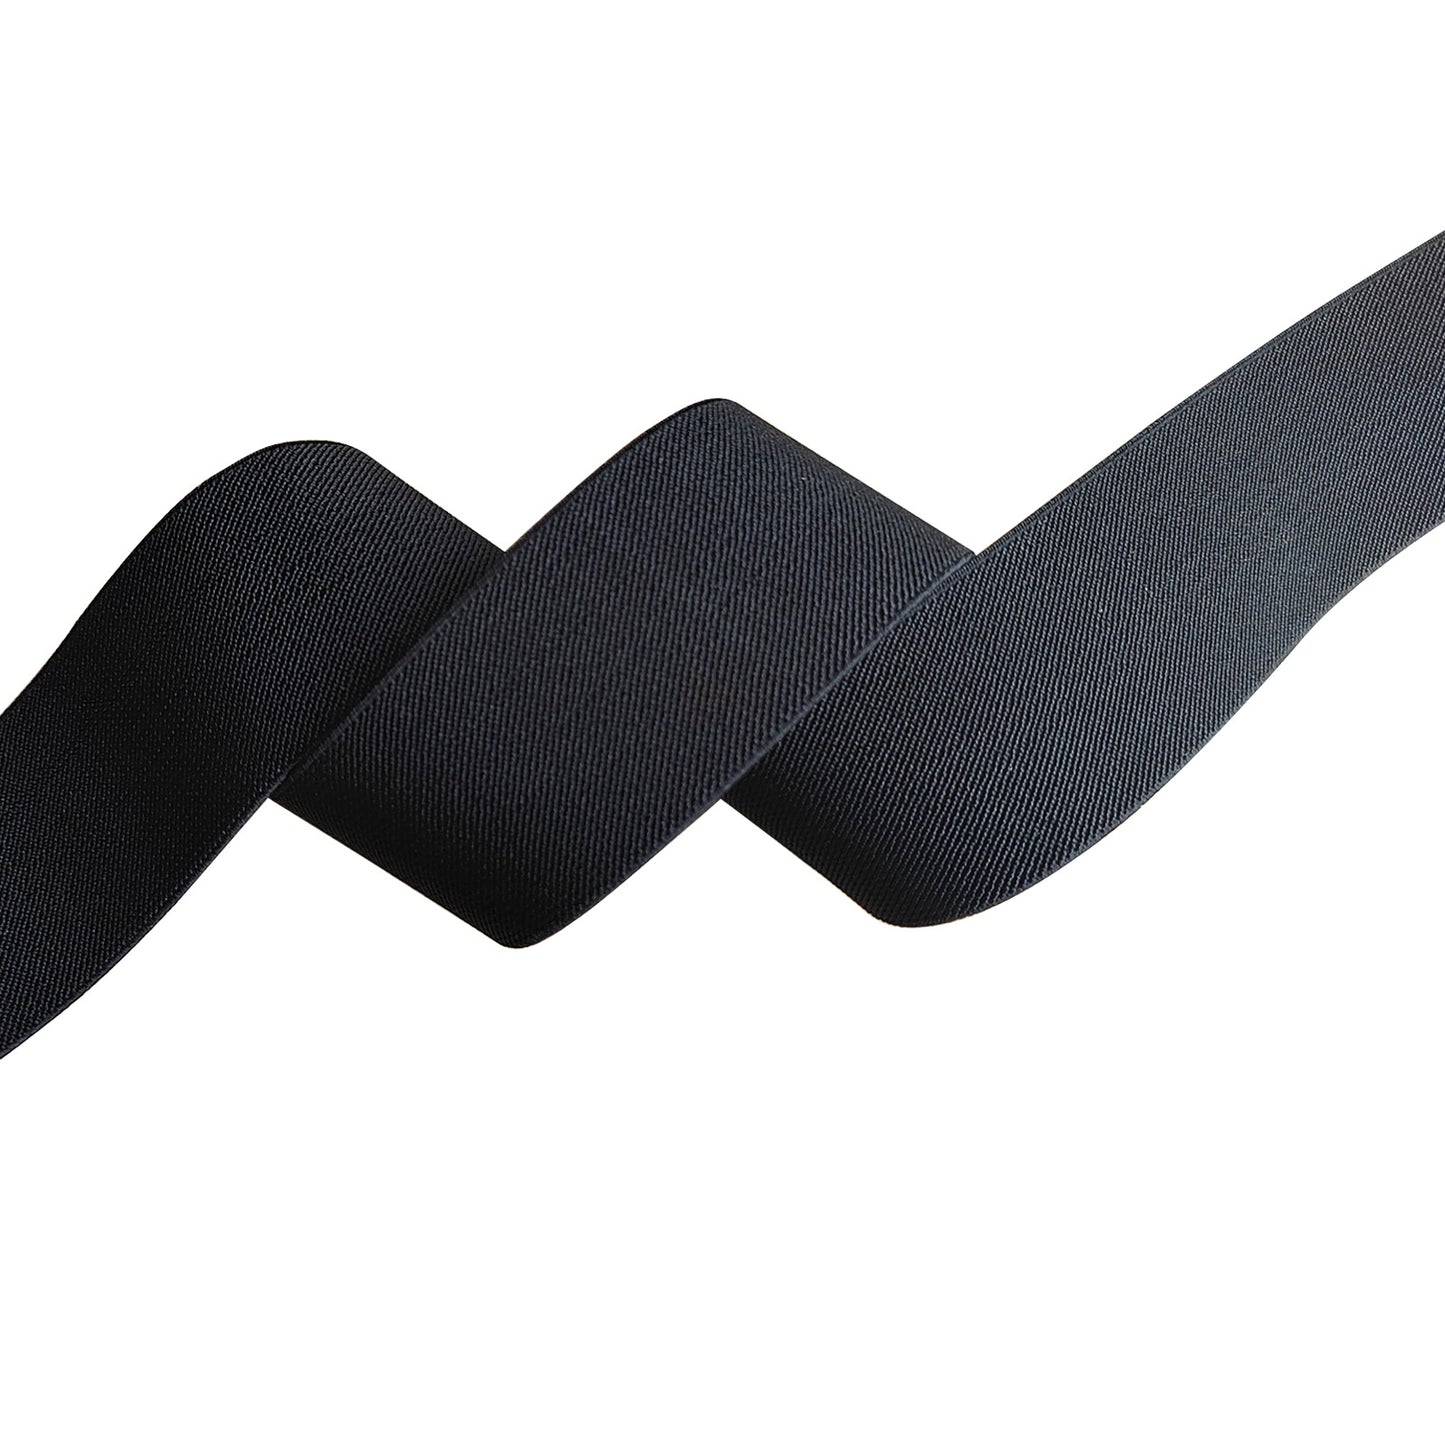 LionVII Men's Strength Elastic Adjustable Suspenders